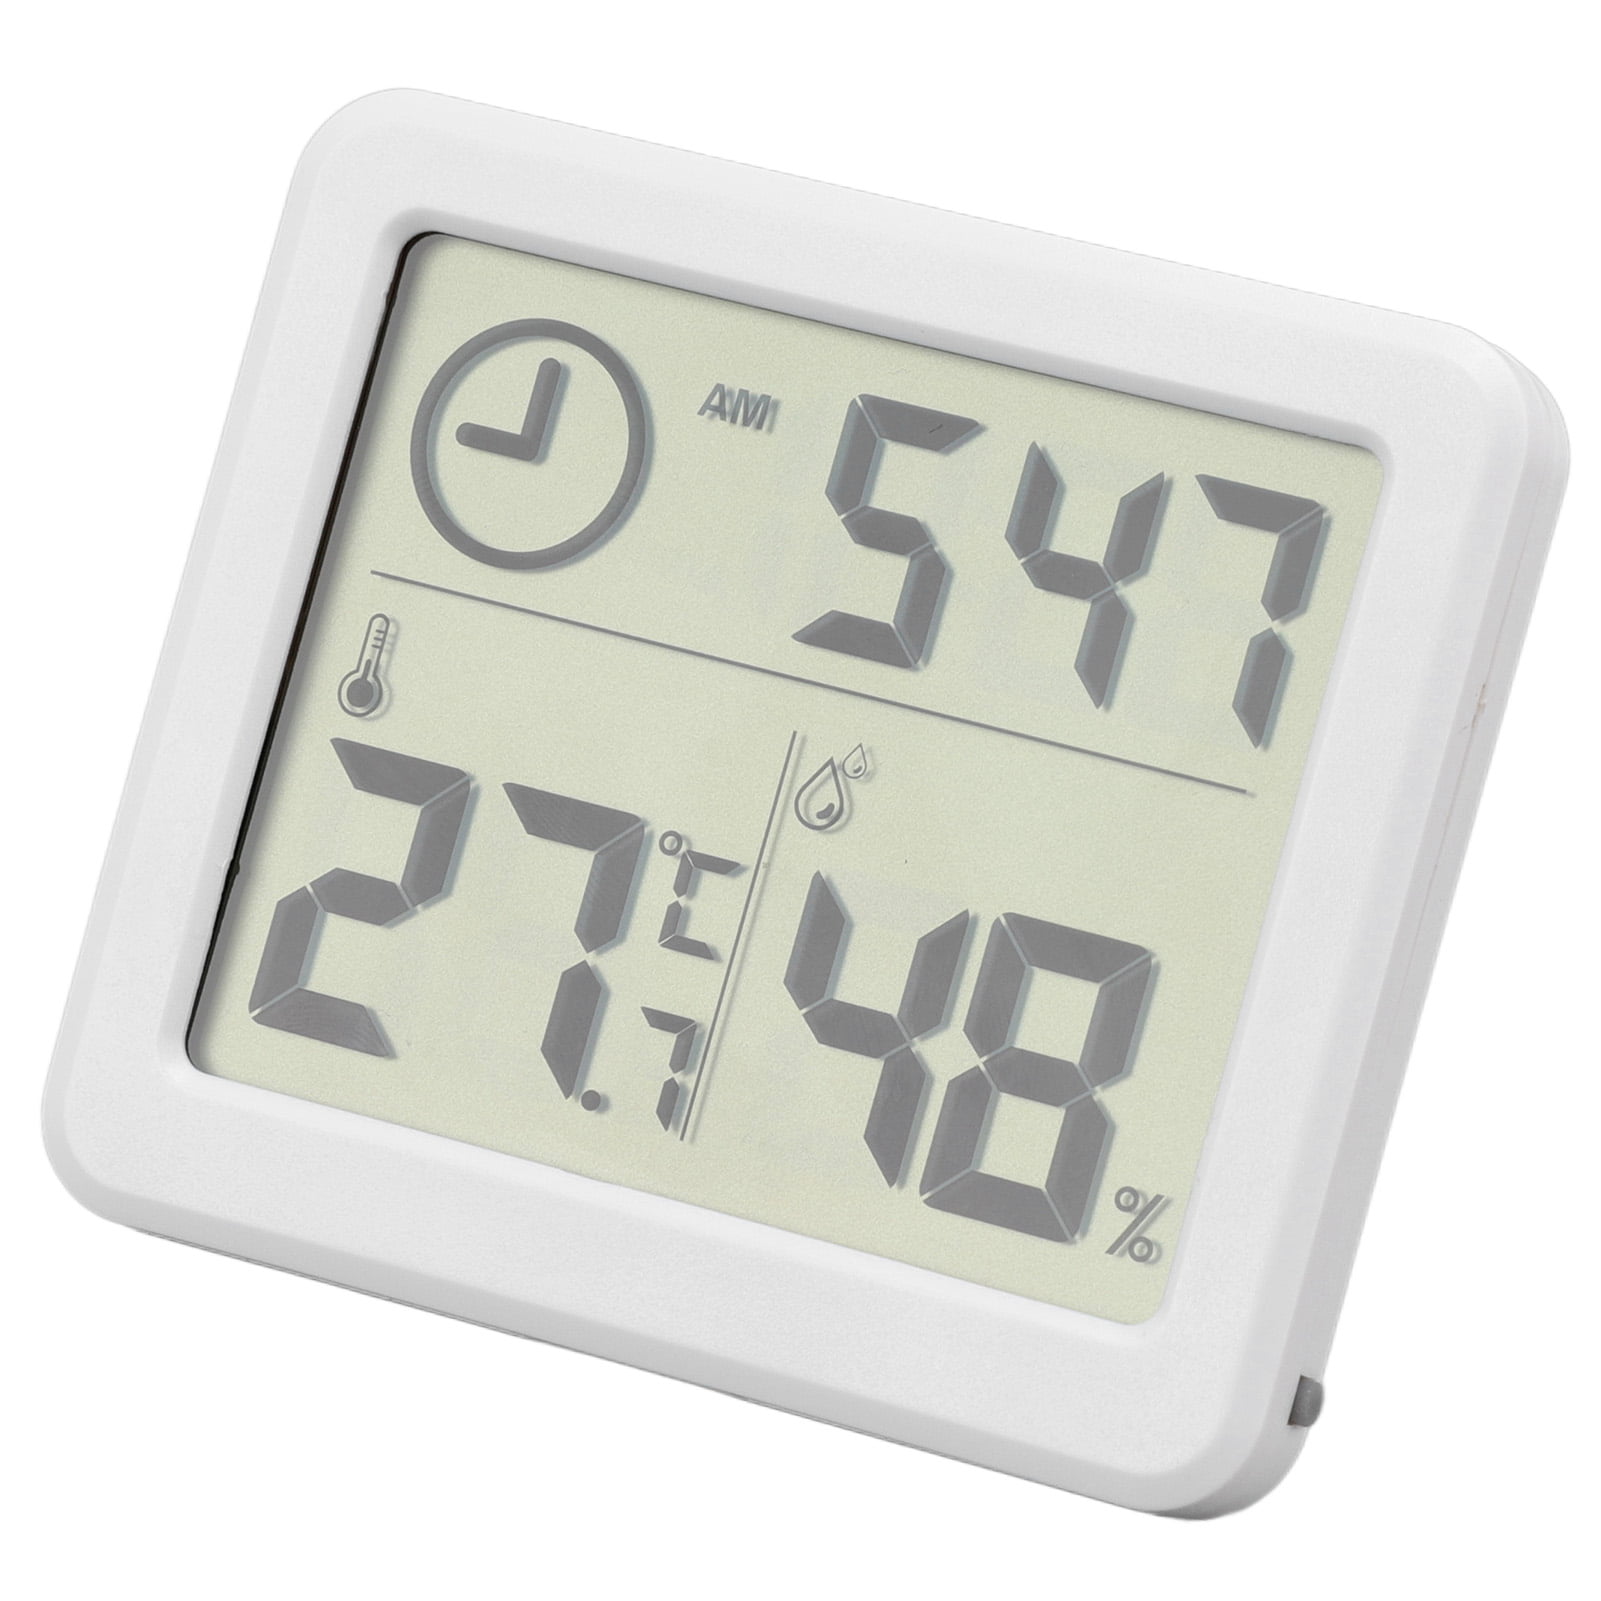 3.2" LCD Digital Temperature Humidity Meter Clock Home Thermometer Hygrometer